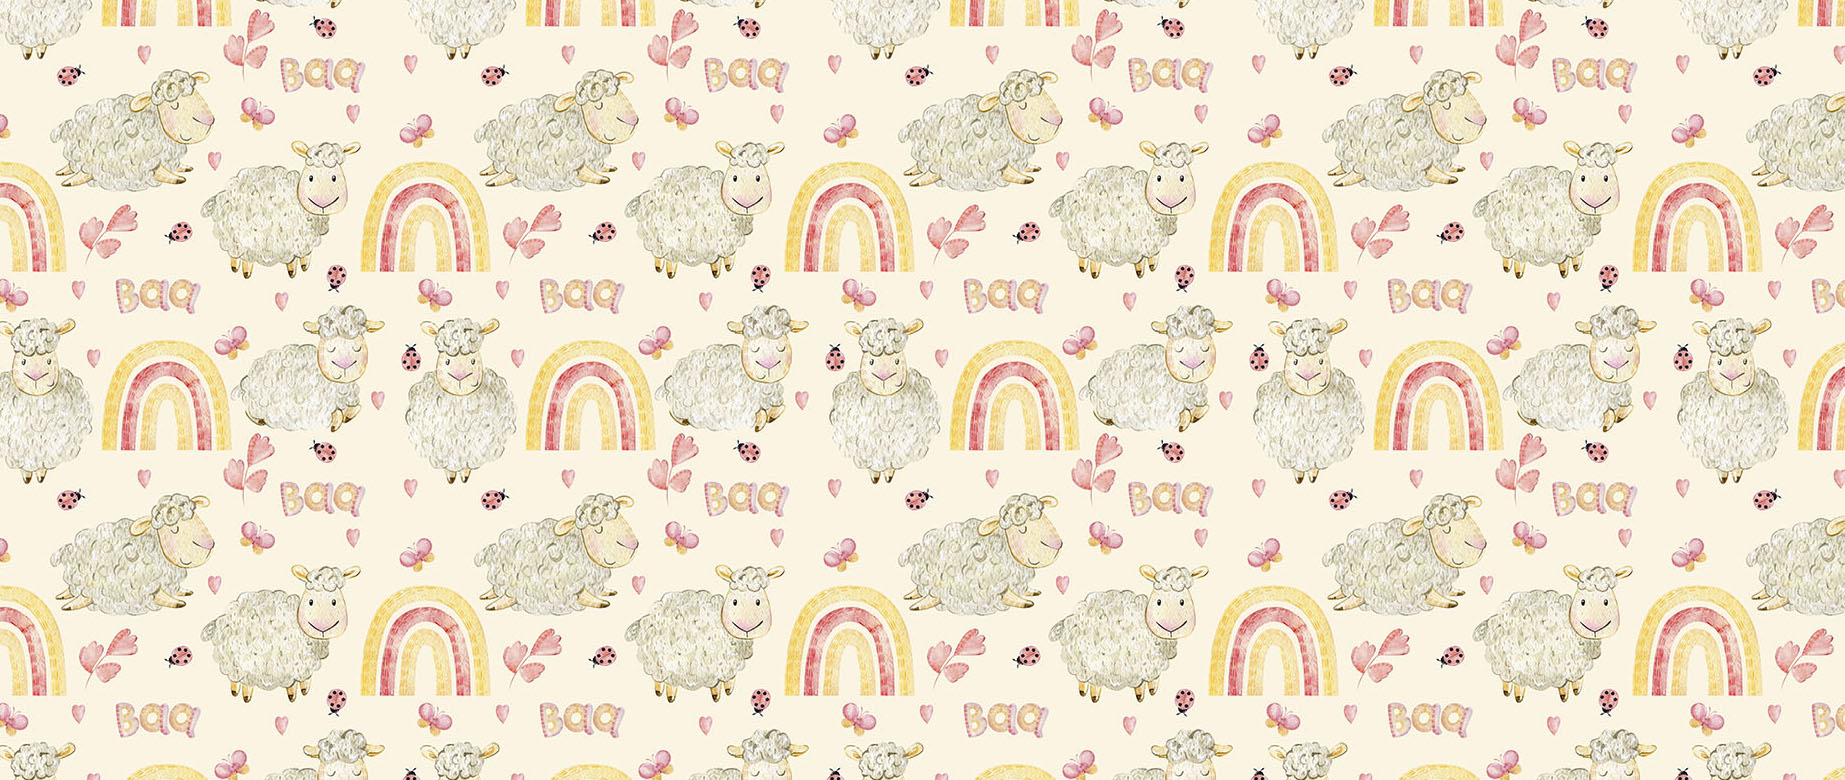 cute-rainbow-and-baa-baa-sheep-wallpaper-seamless-repeat-view